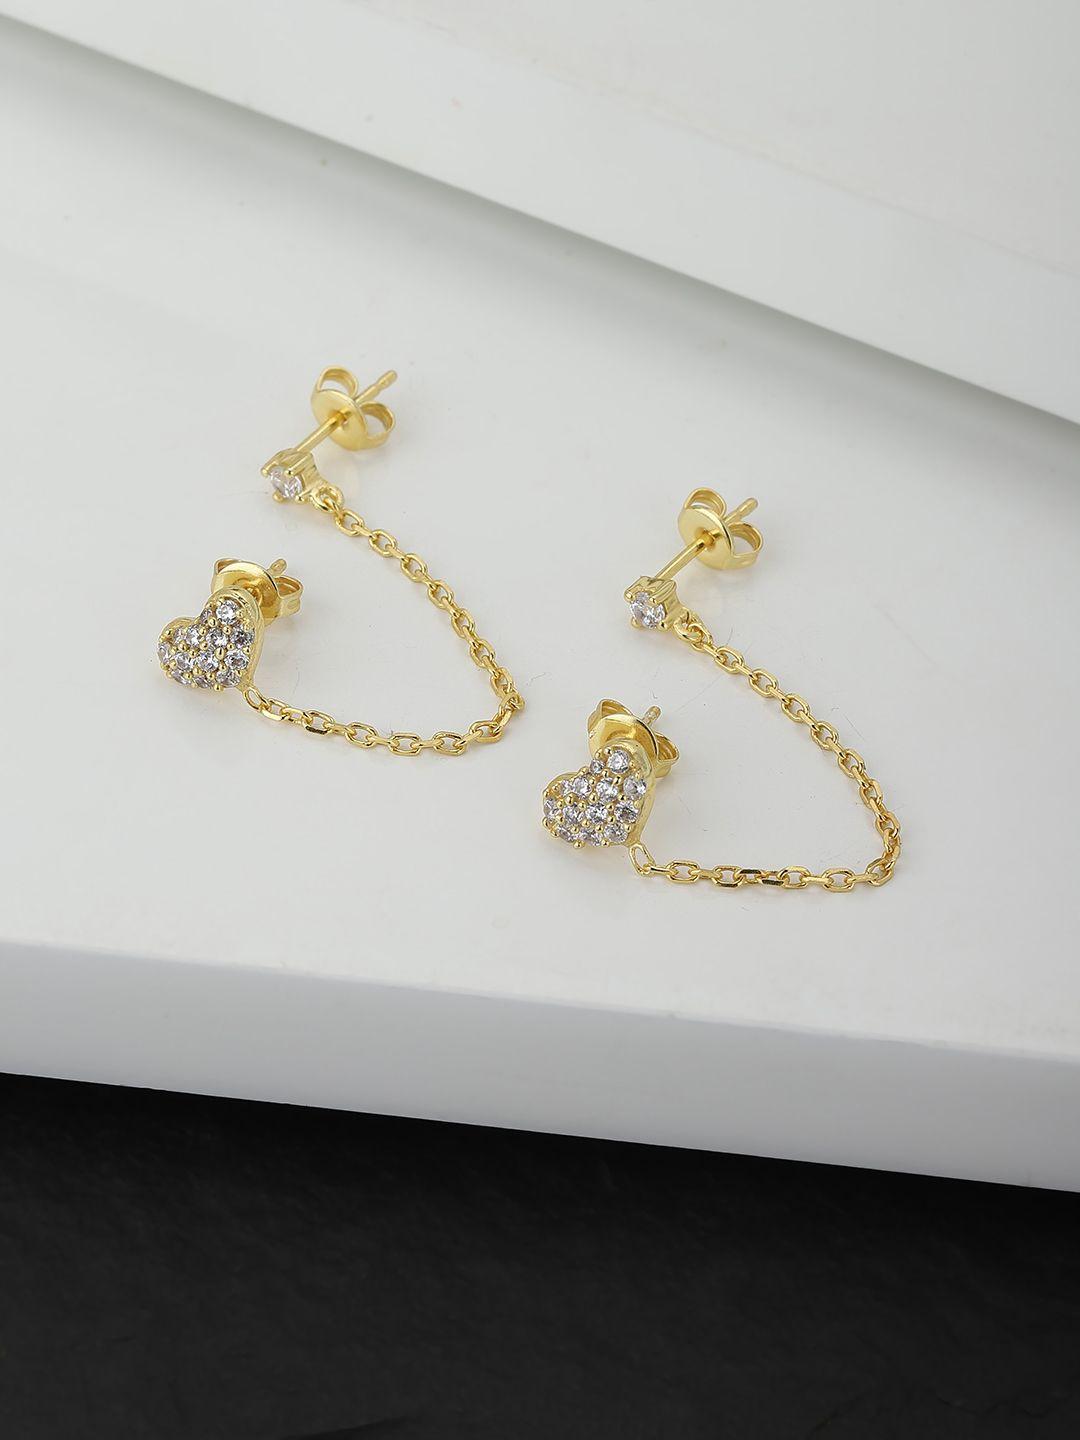 carlton-london-gold-plated-heart-shaped-studs-earrings